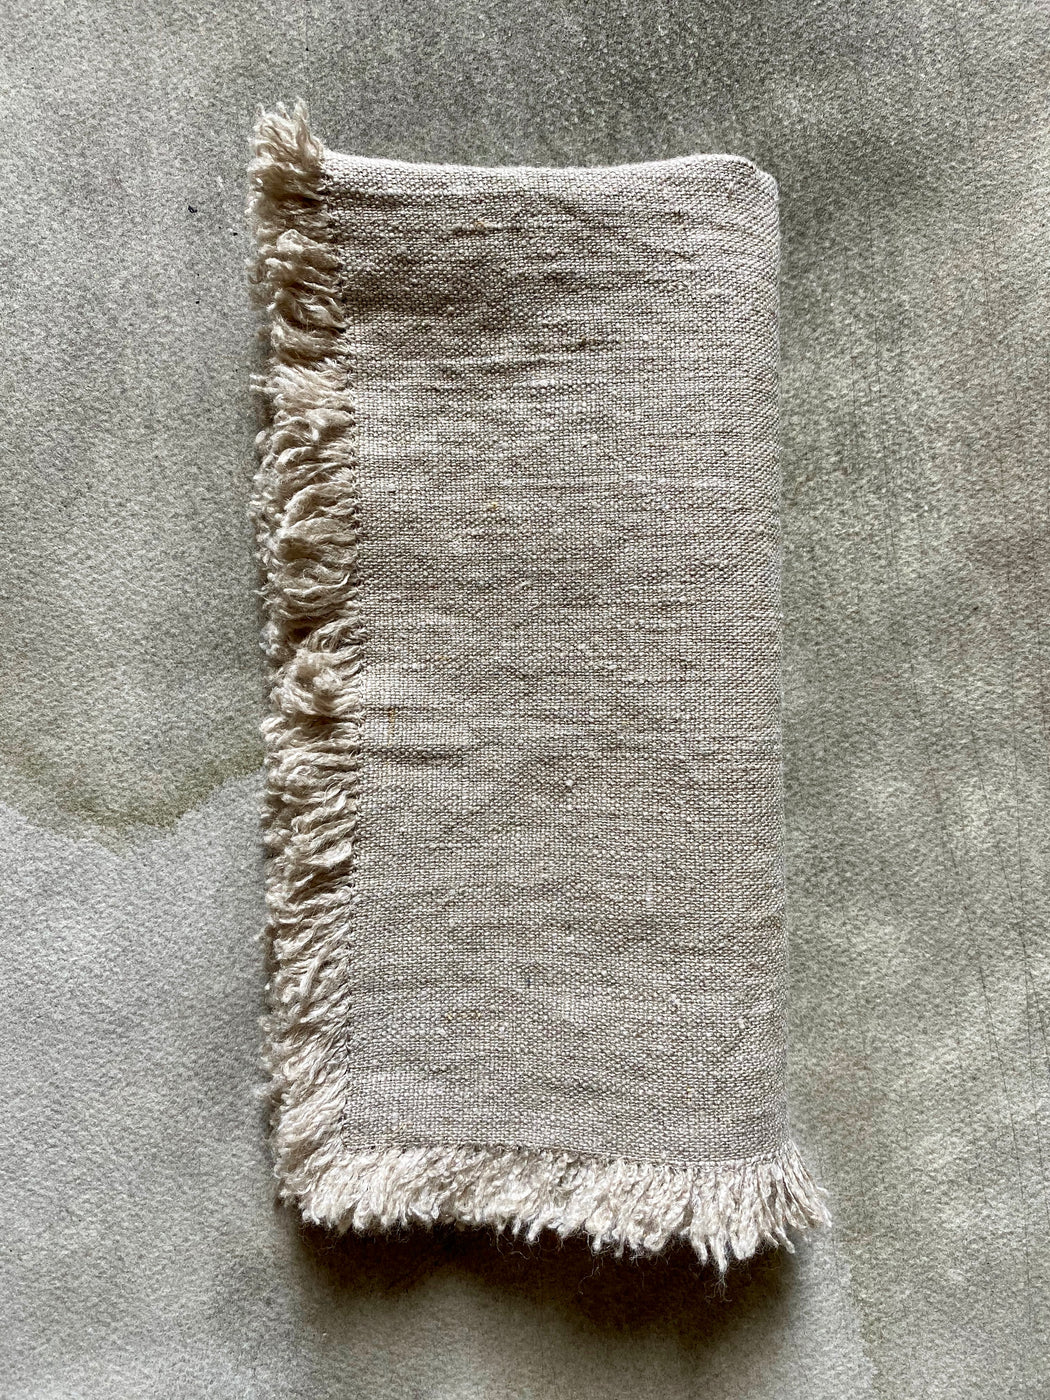 Axlings Swedish Linen Napkins - Natural